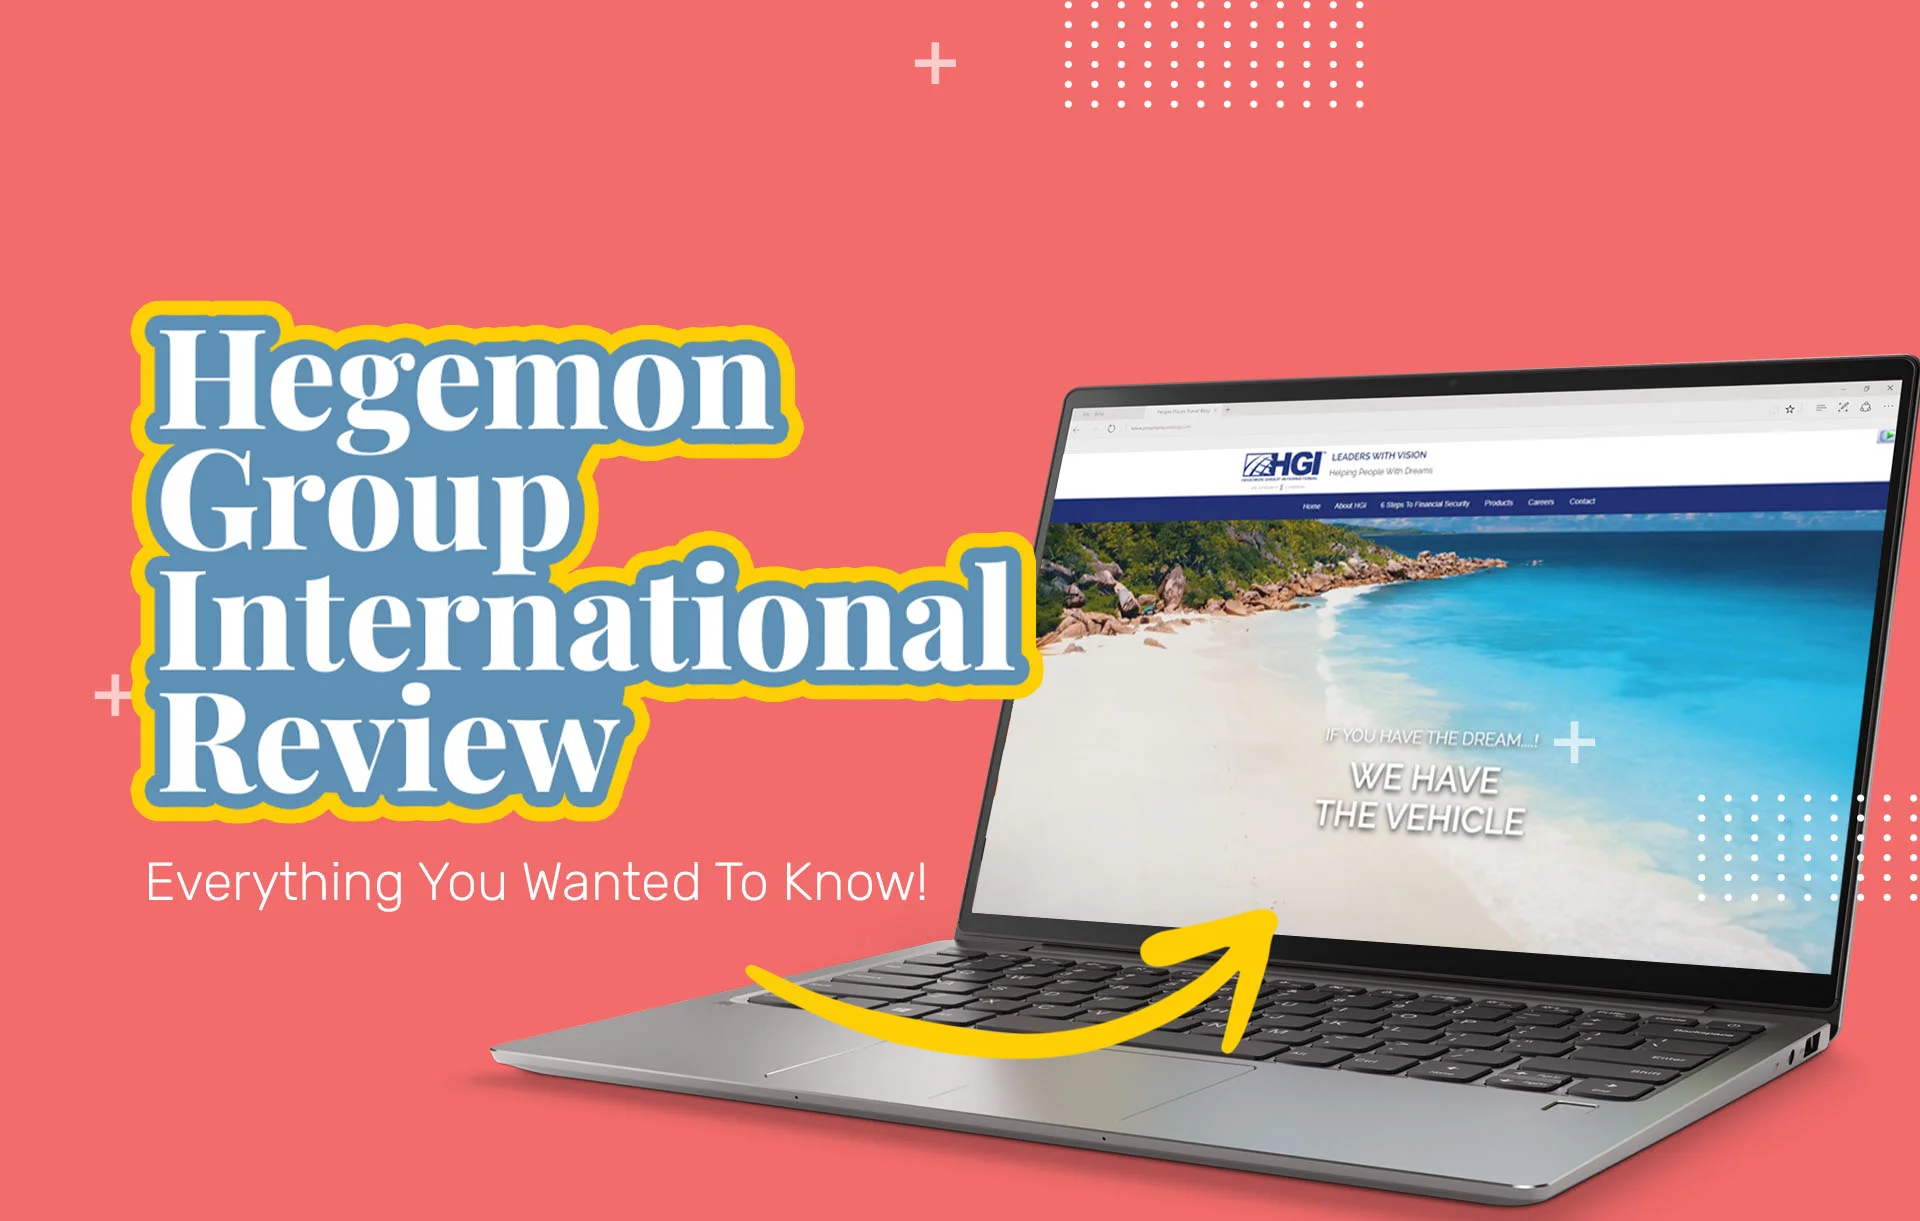 Hegemon Group International Reviews